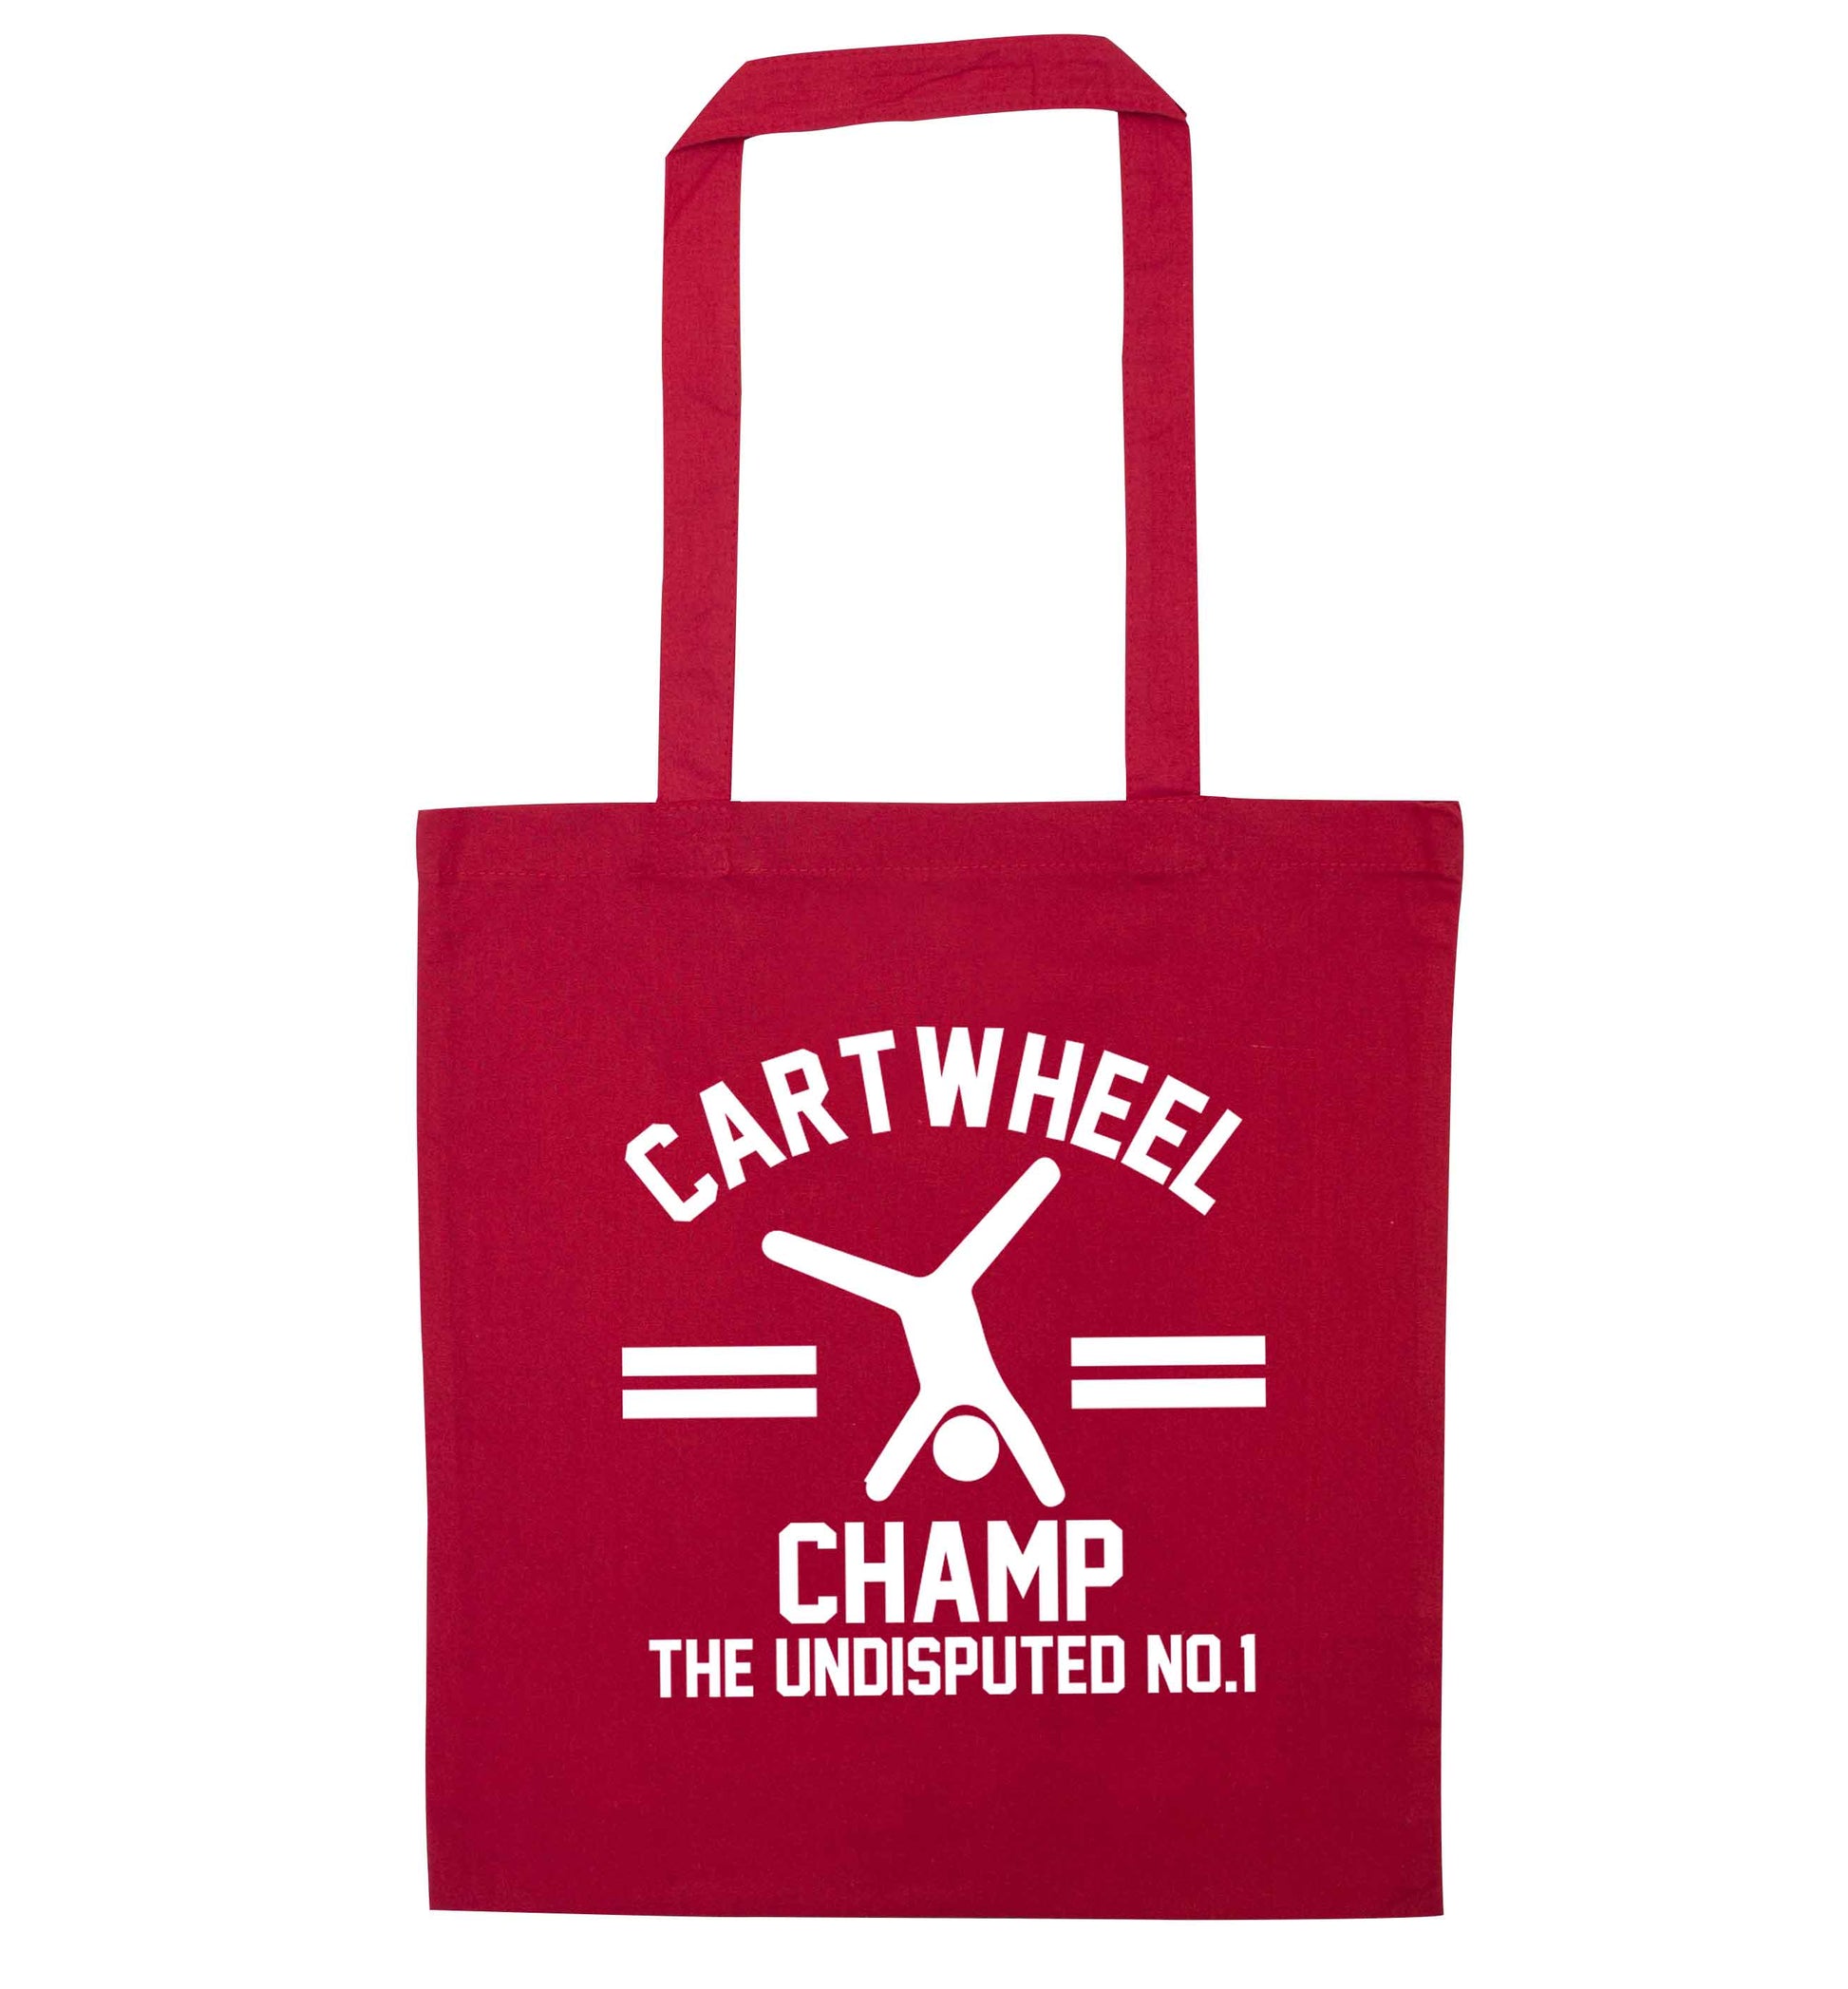 Undisputed cartwheel championship no.1  red tote bag